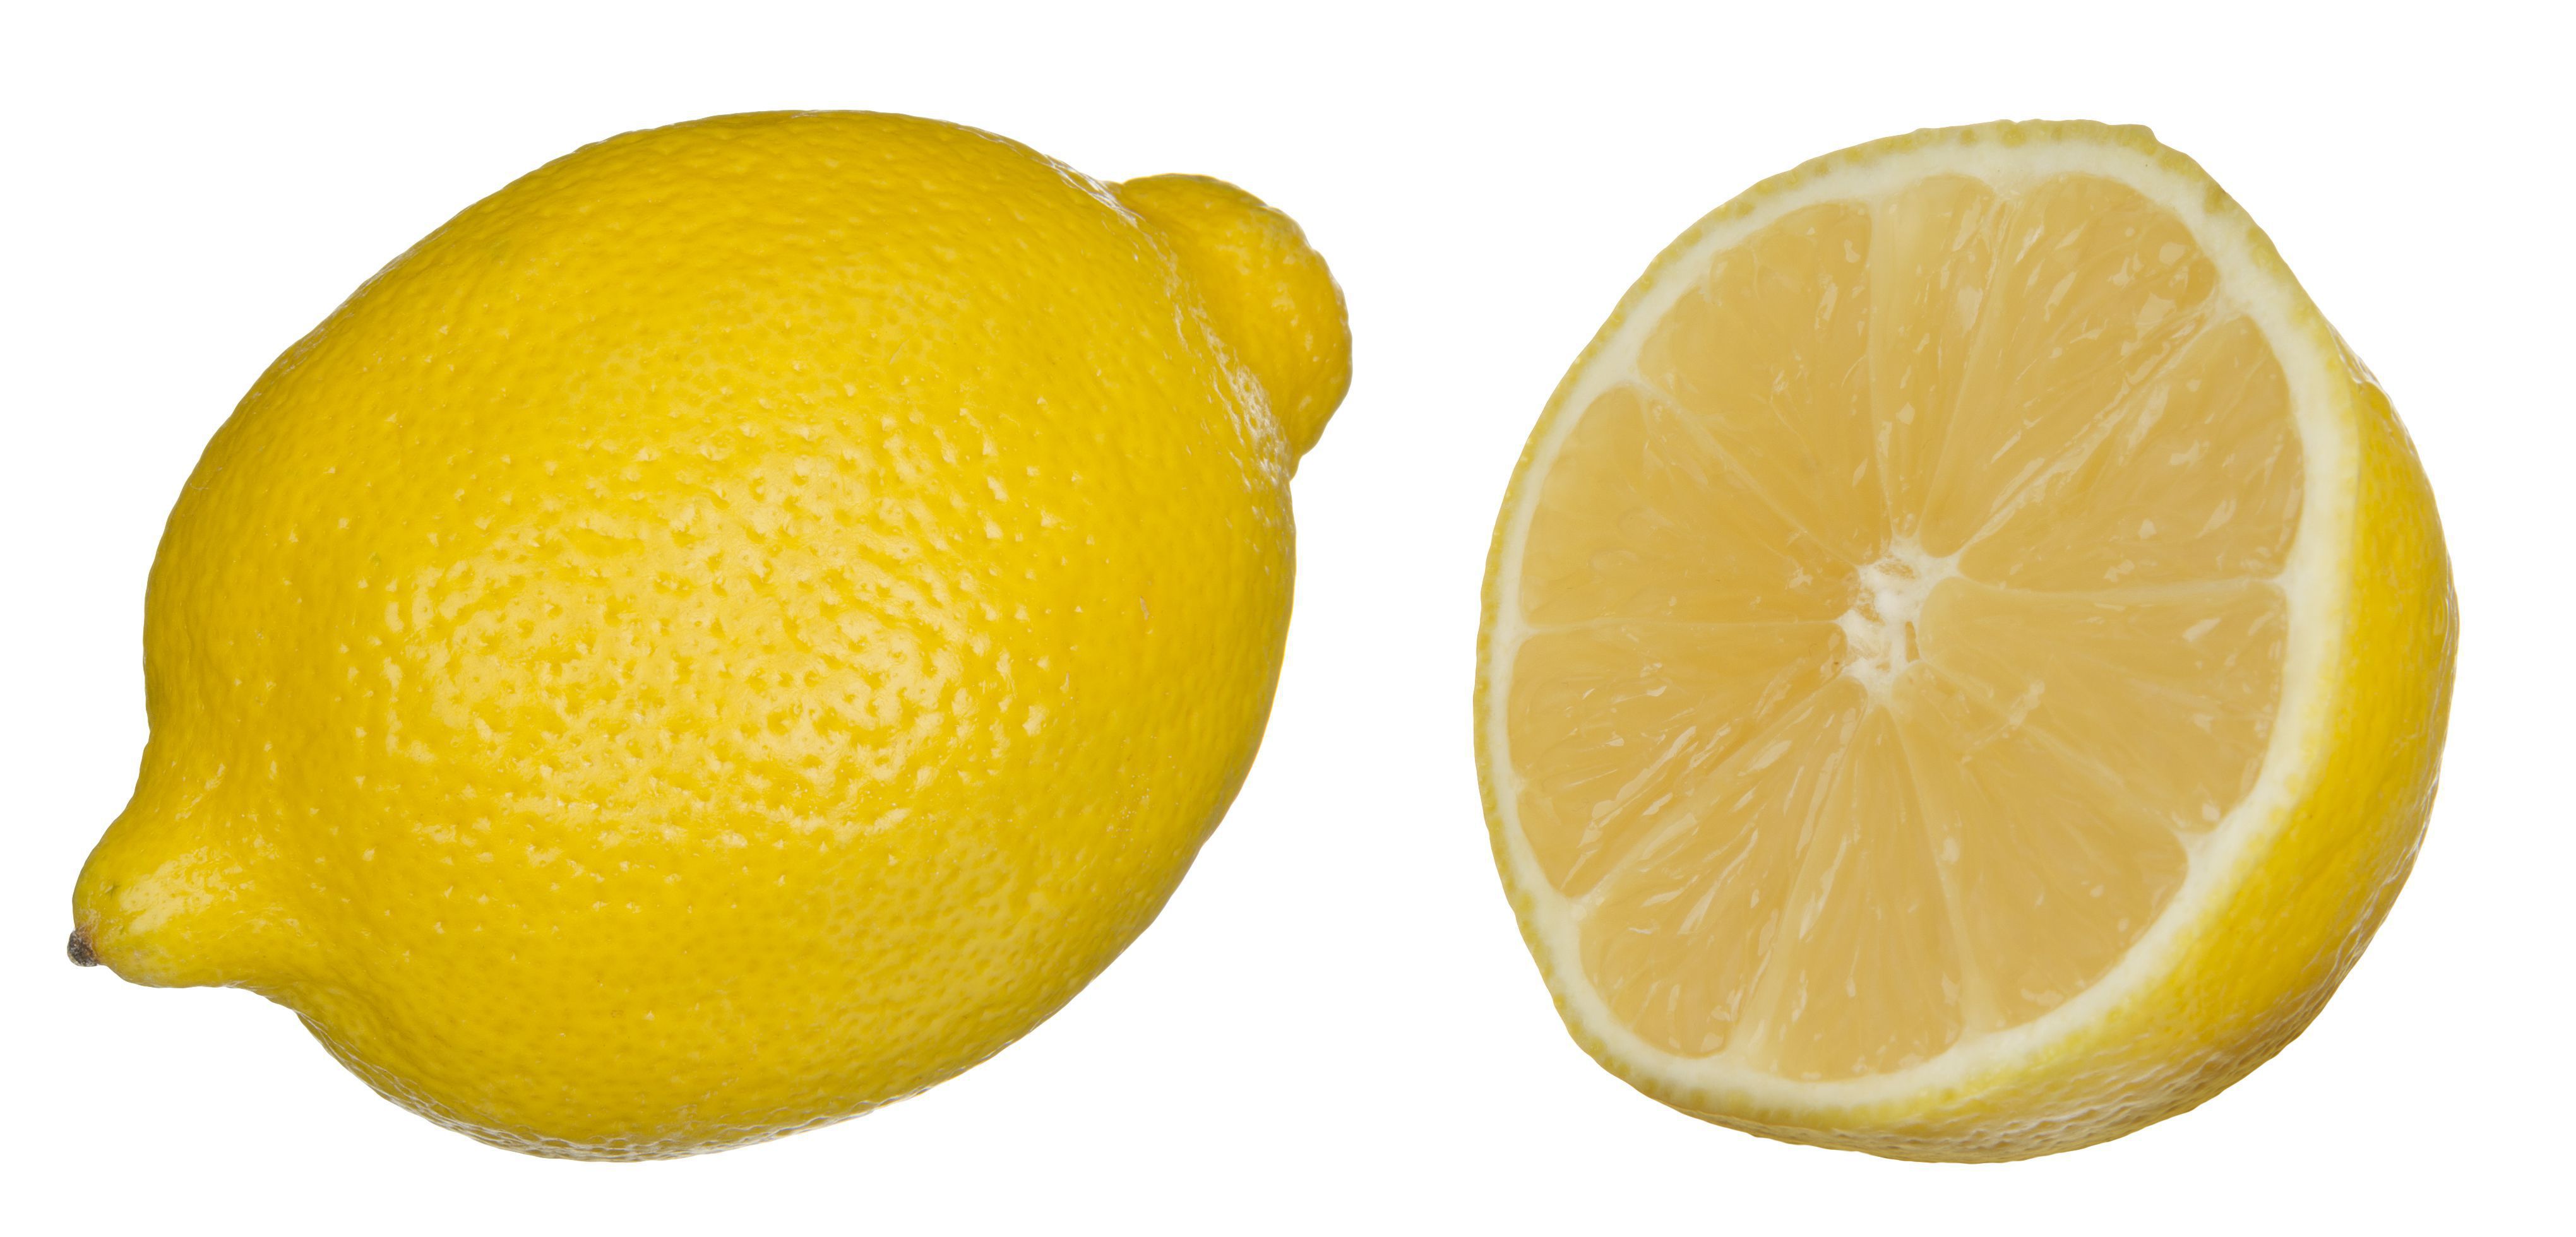 limone wallpaper hd,agrume,limone,lime,limone meyer,frutta